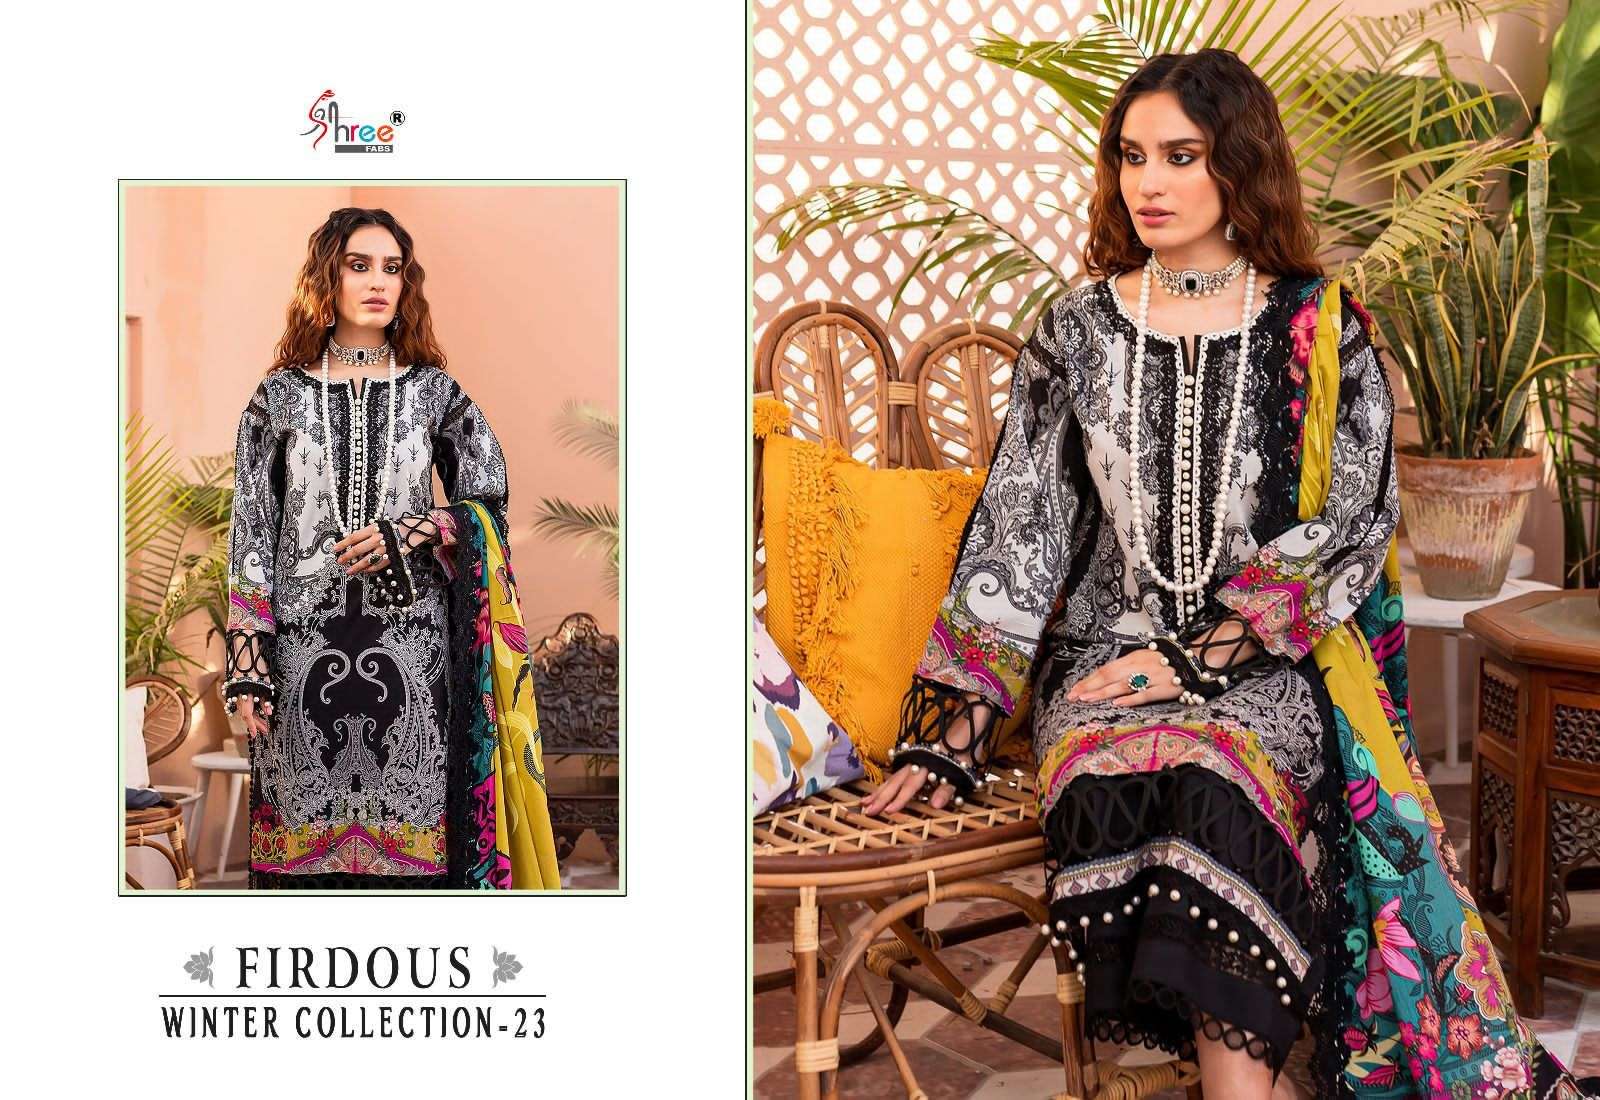 shree fab firdous winter collection-23 3322-3329 series designer fancy pakistani salwar kameez wholesaler surat